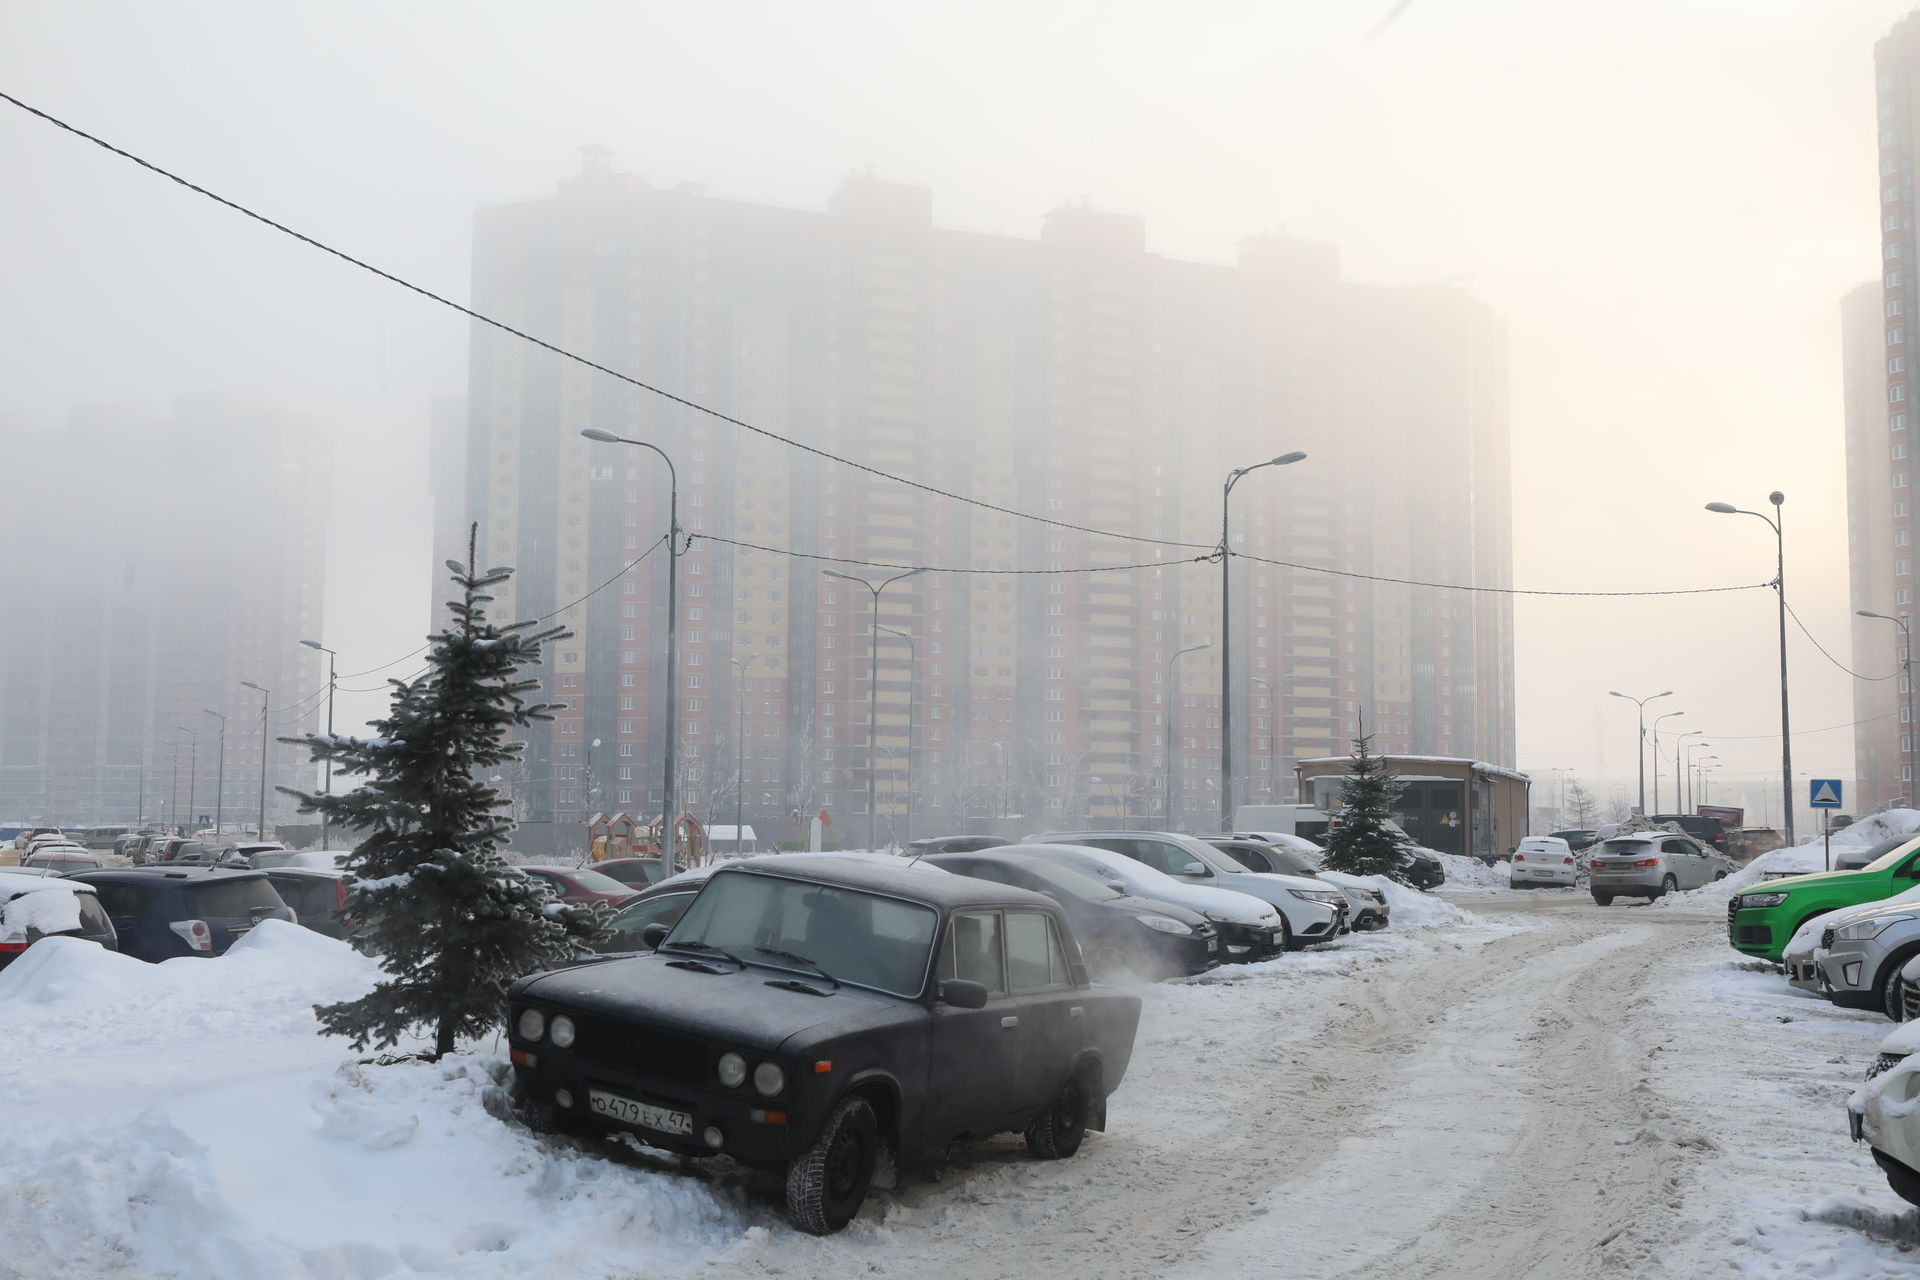 24 января 2023 г. Туман зимой в городе. Зимний туман в городе. Туманная зима город. Туман зима город.